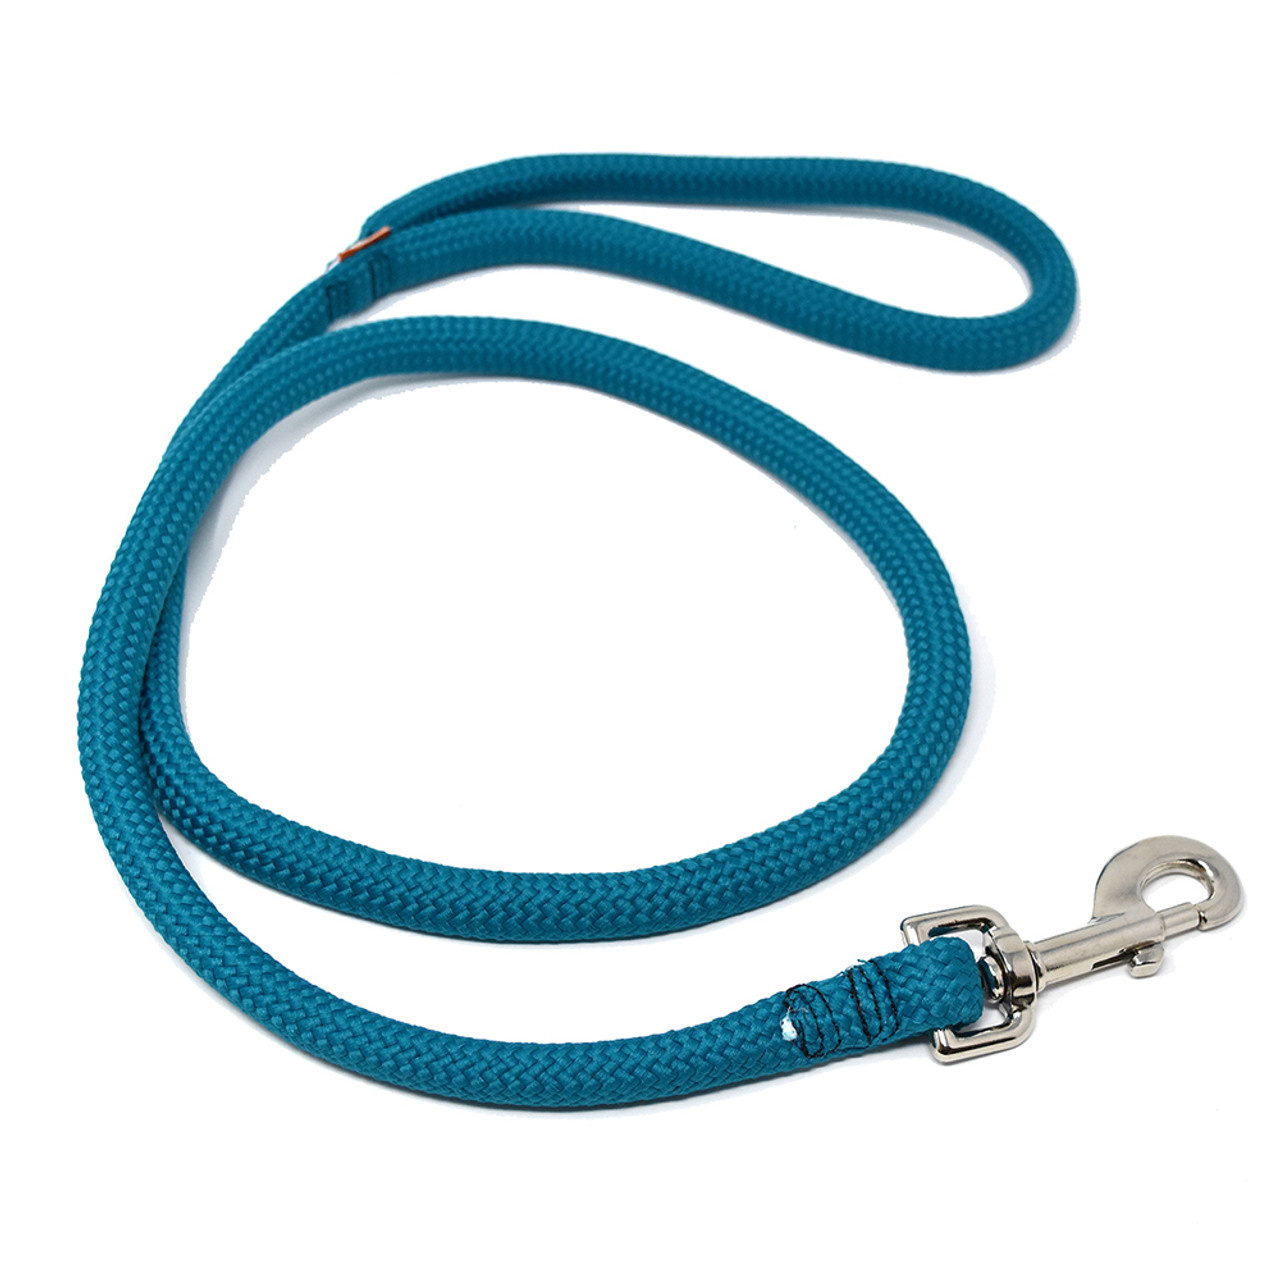 braided rope dog leash